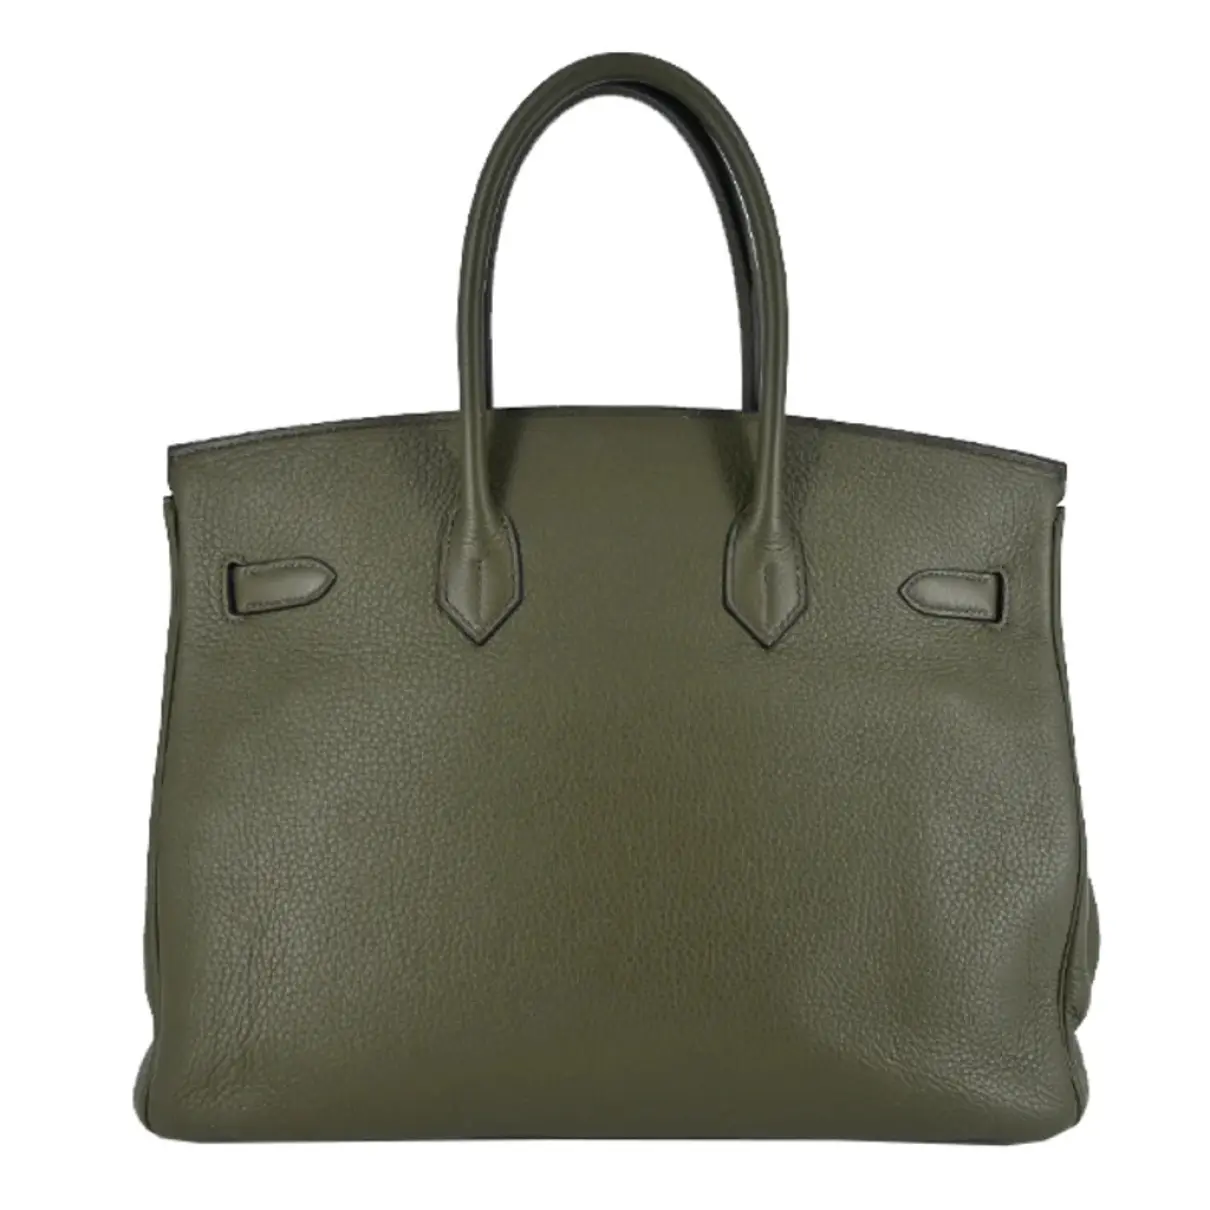 Buy Hermès Birkin 35 leather handbag online - Vintage